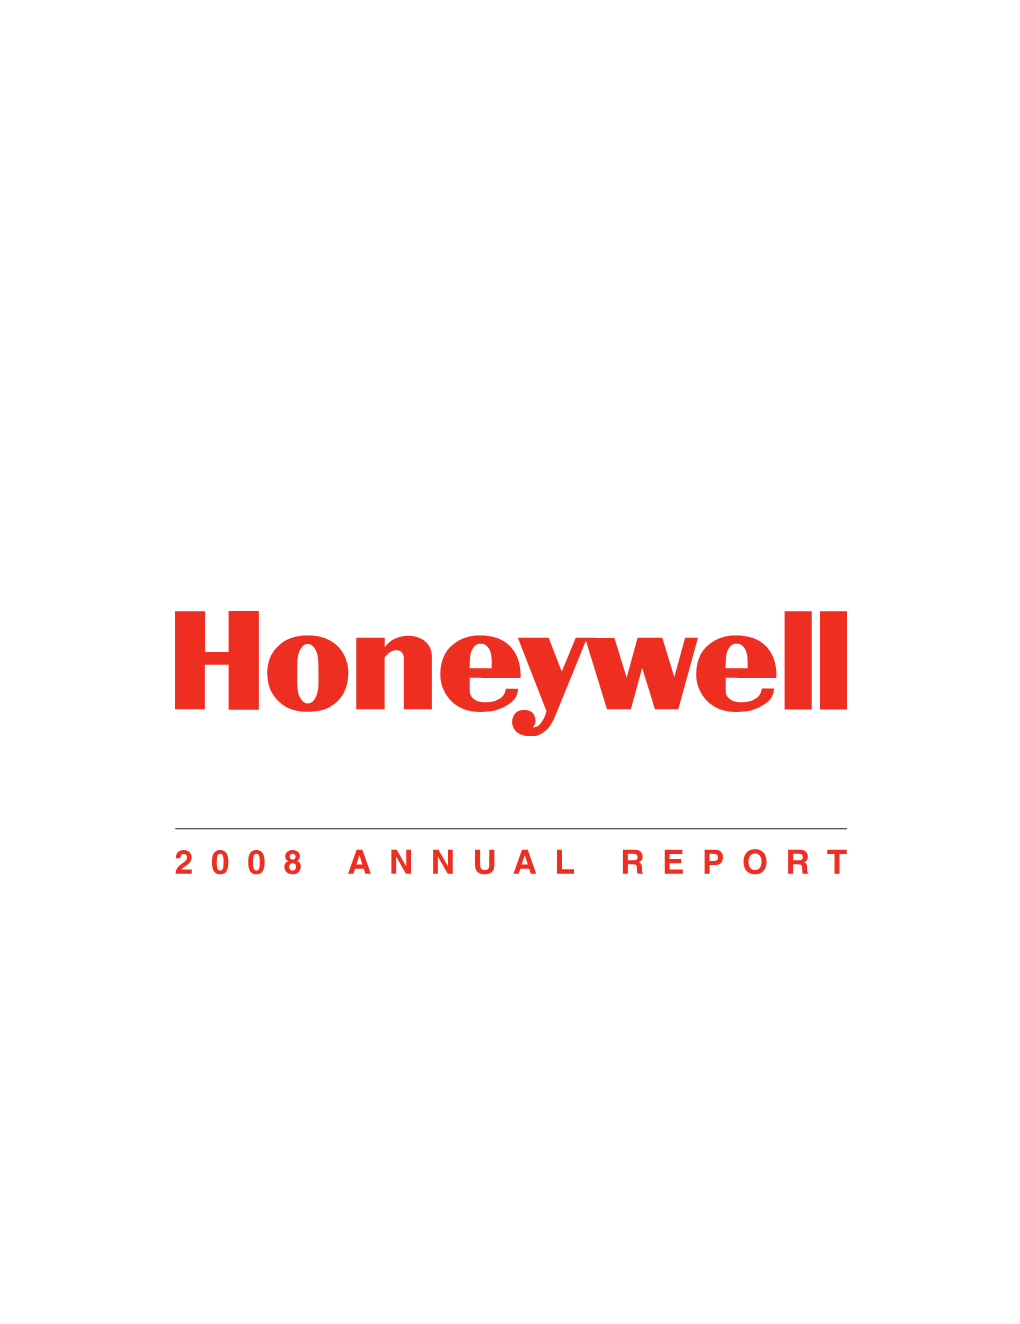 Honeywell 2008 Annual Report